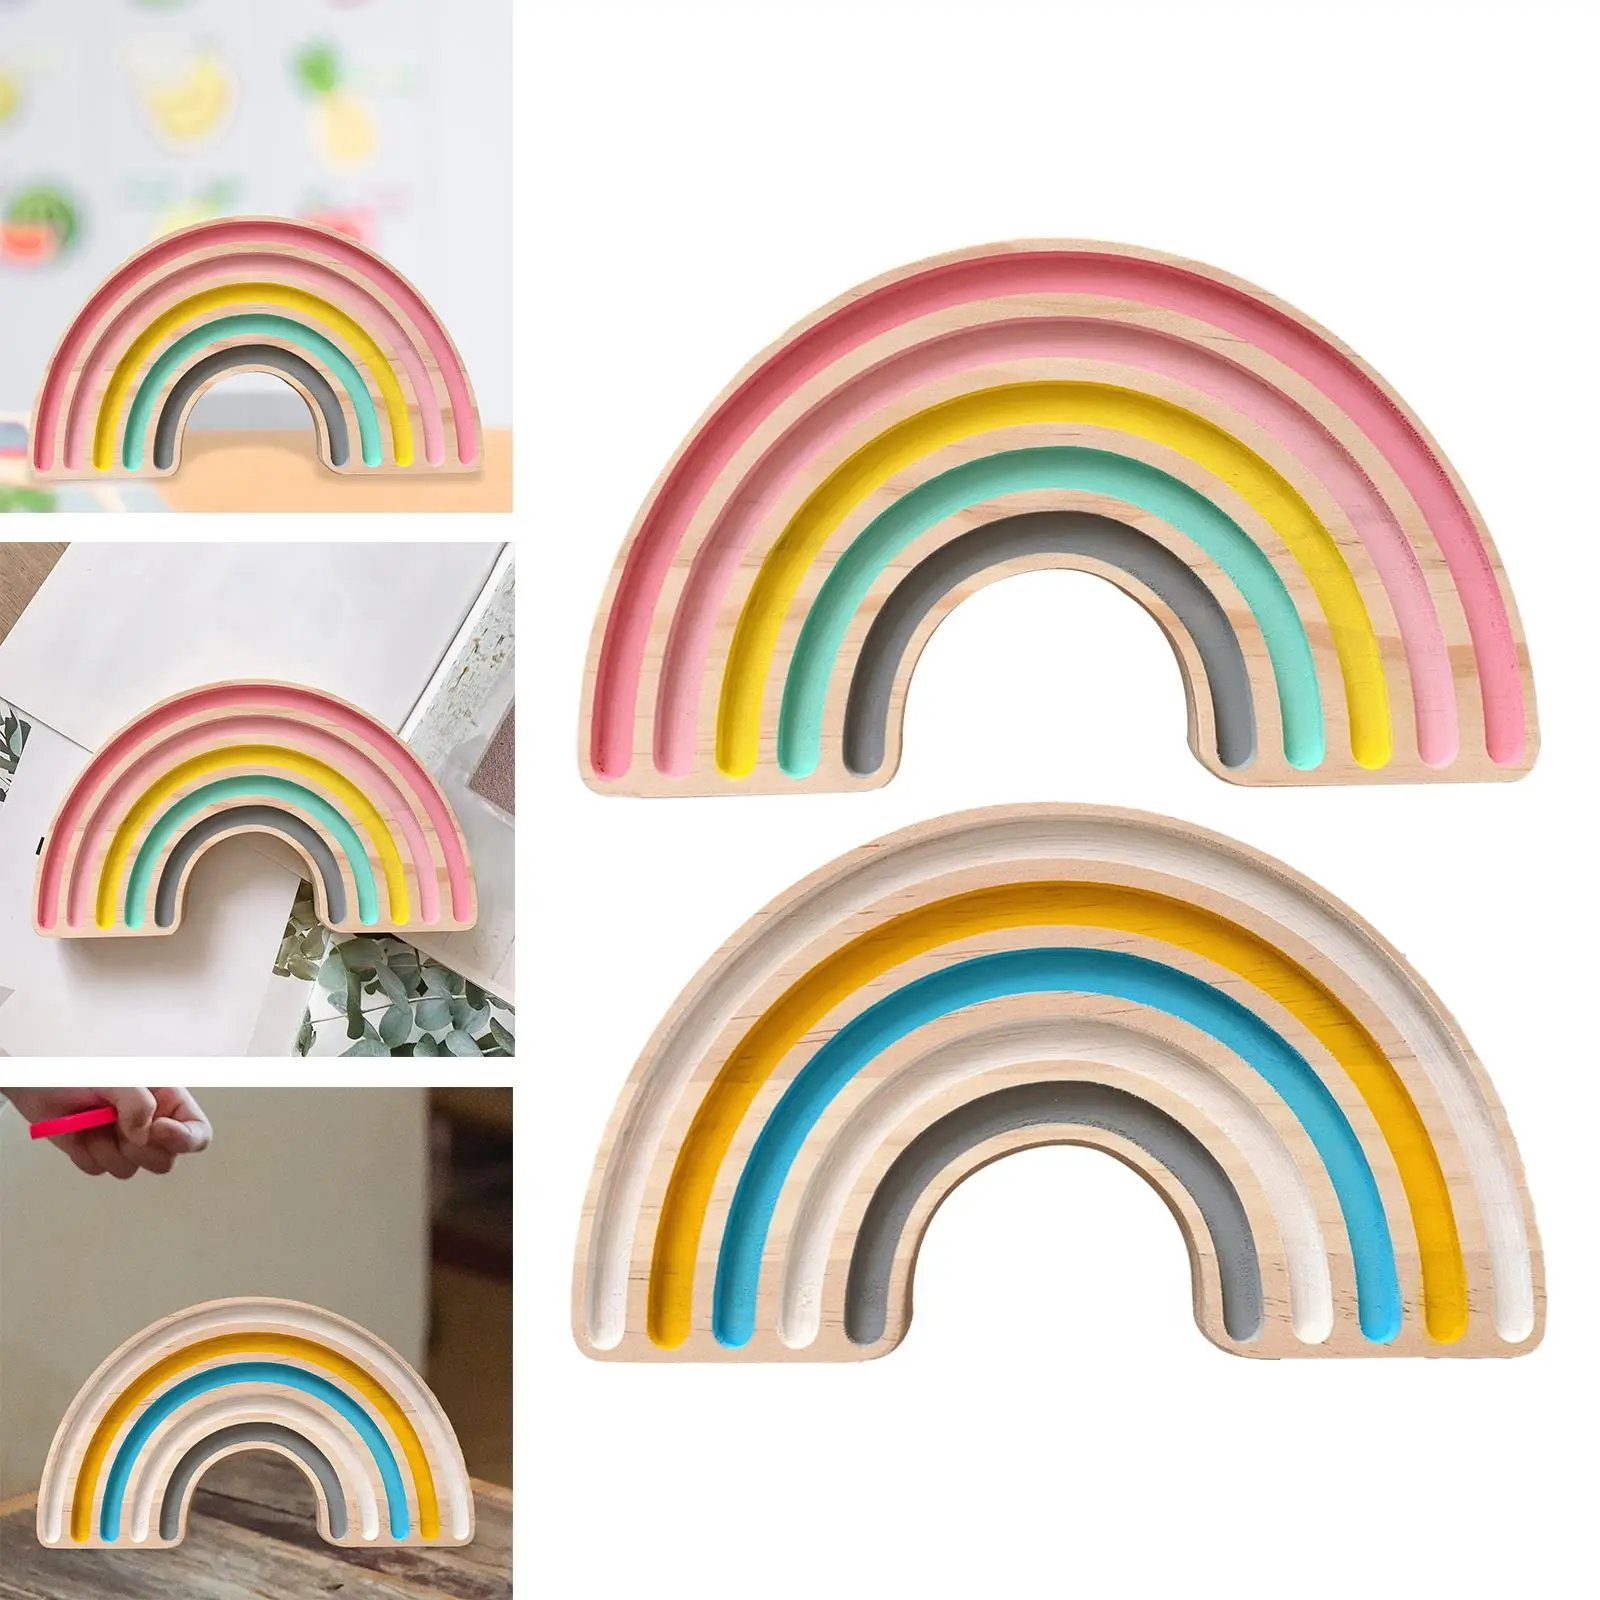 Handmade Wooden Rainbow Stacker Board Ornament Decorative Creative Craft Block for Baby Room Desktop Home Decoration Playroom